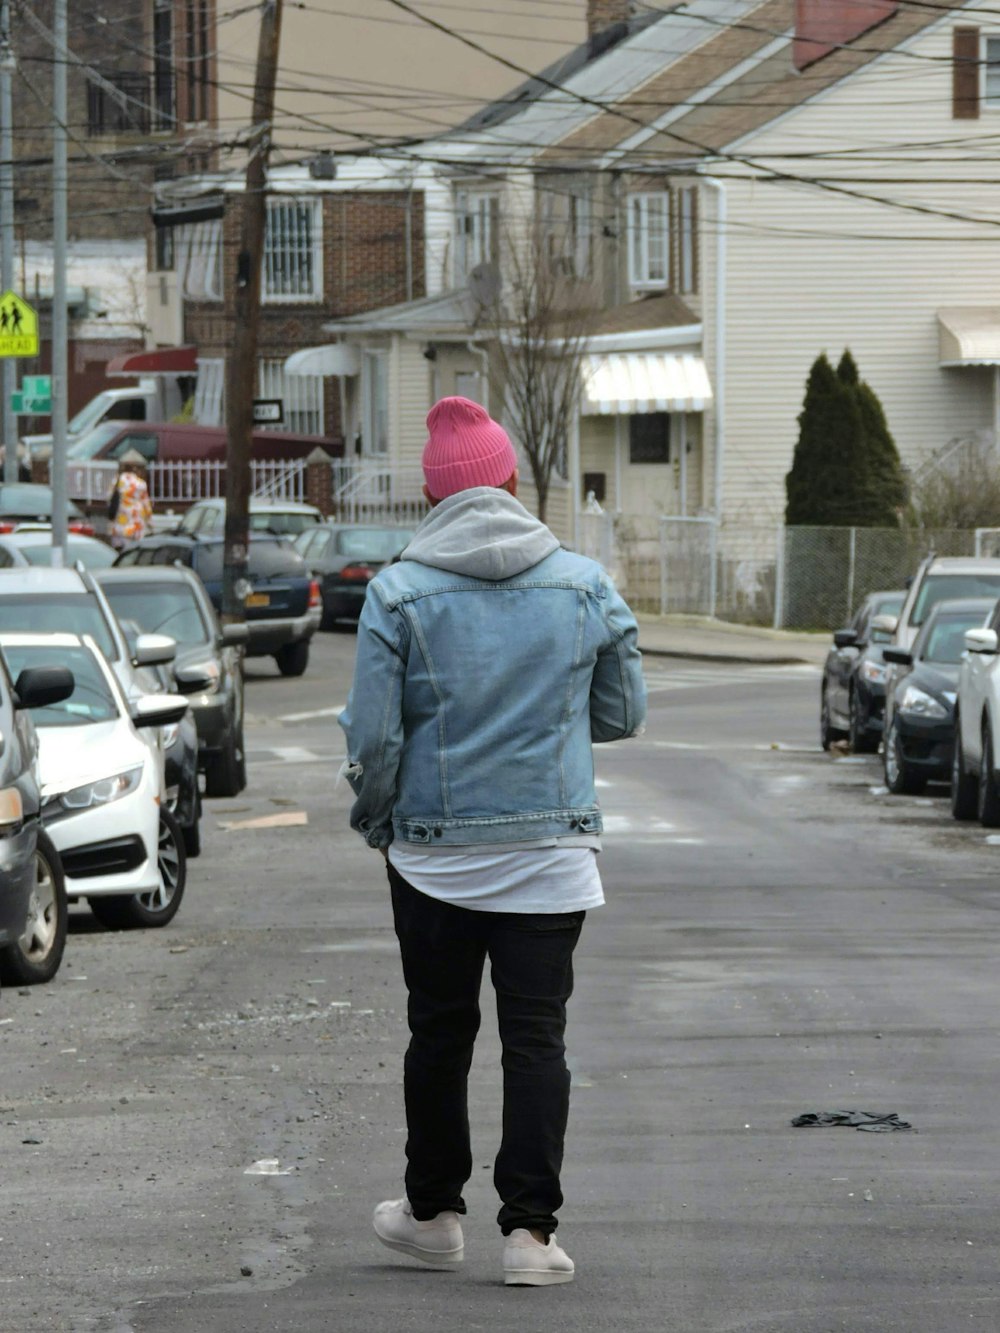 a person walking down a street